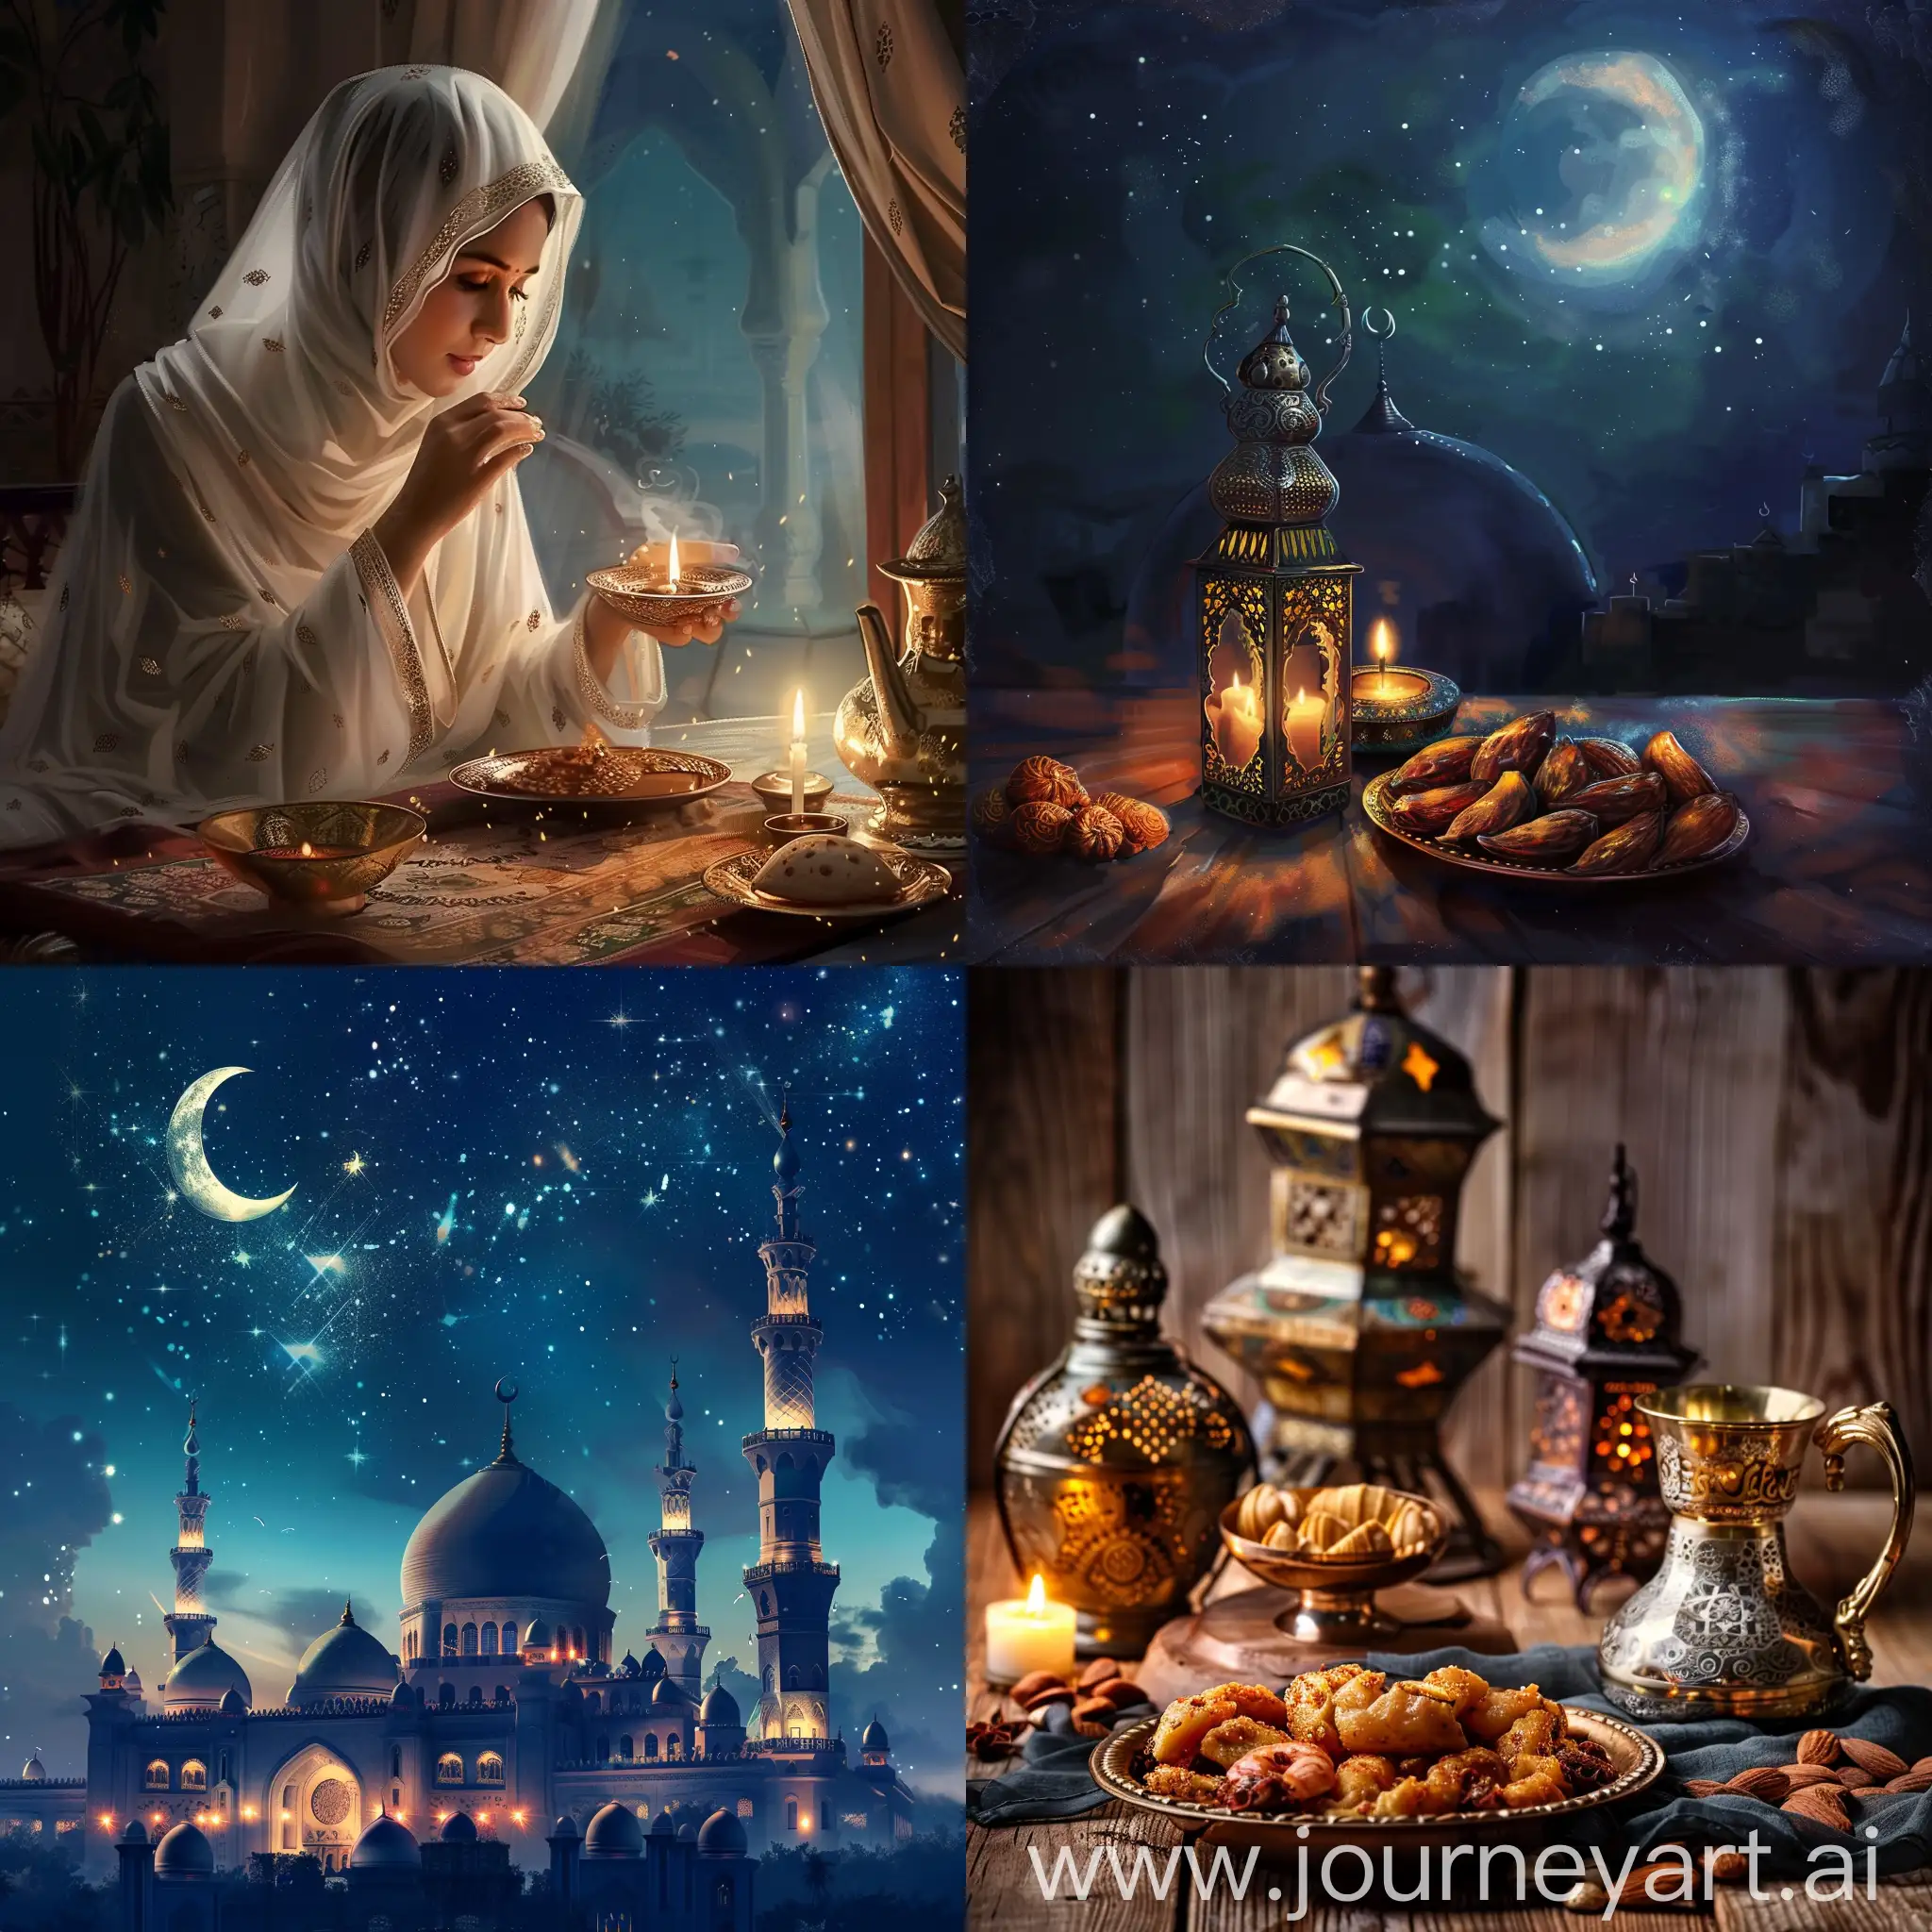 Joyful-Ramadan-Celebration-with-Traditional-Decorations